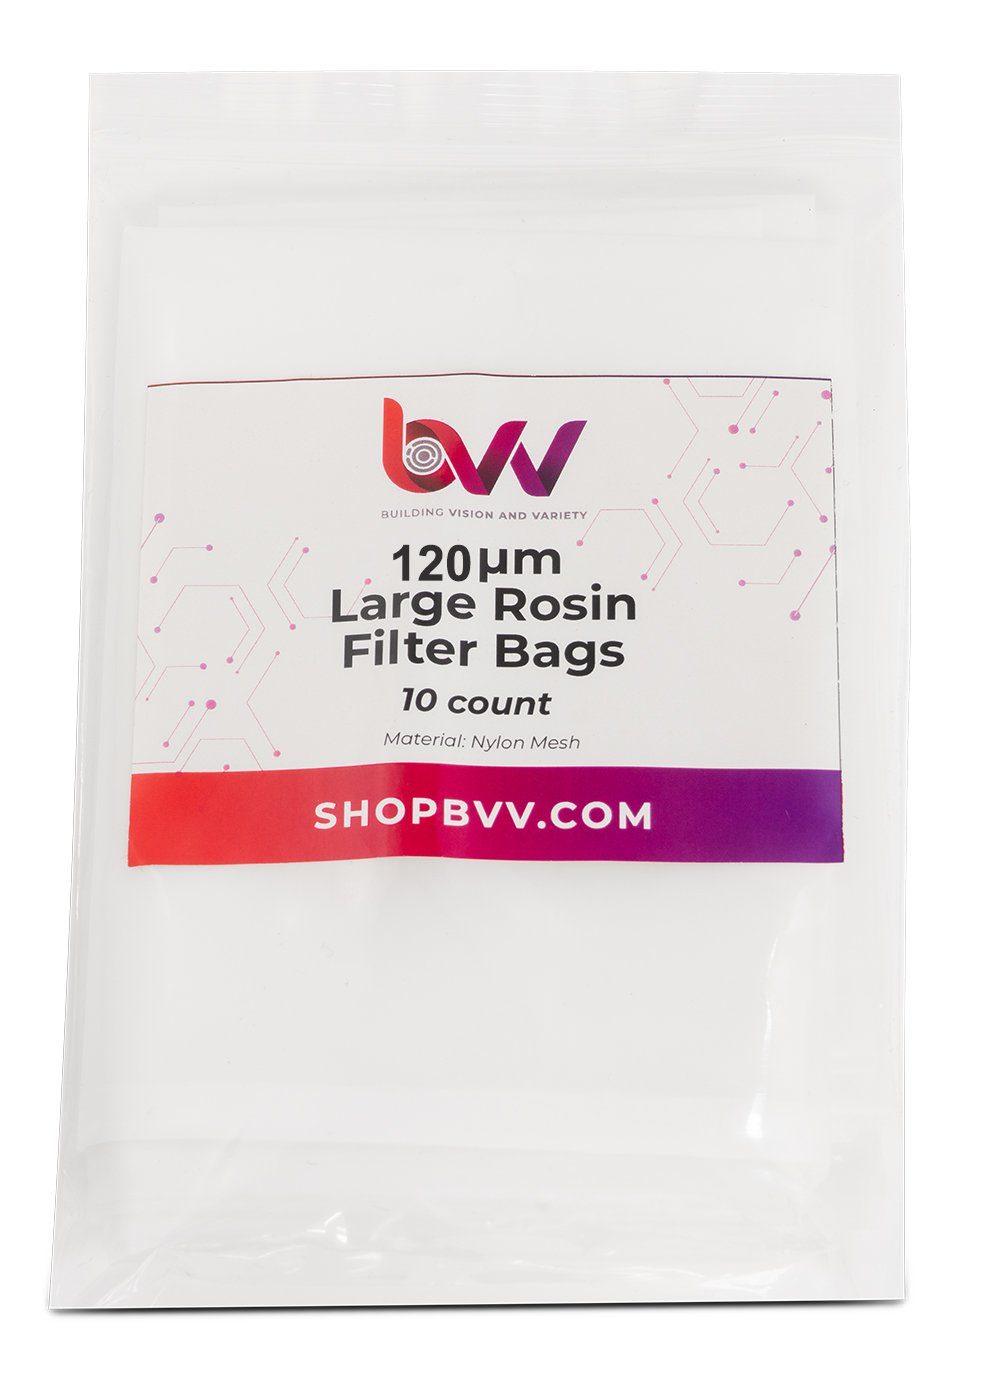 Large Rosin Filter Bags - 10 Pack Shop All Categories BVV 120